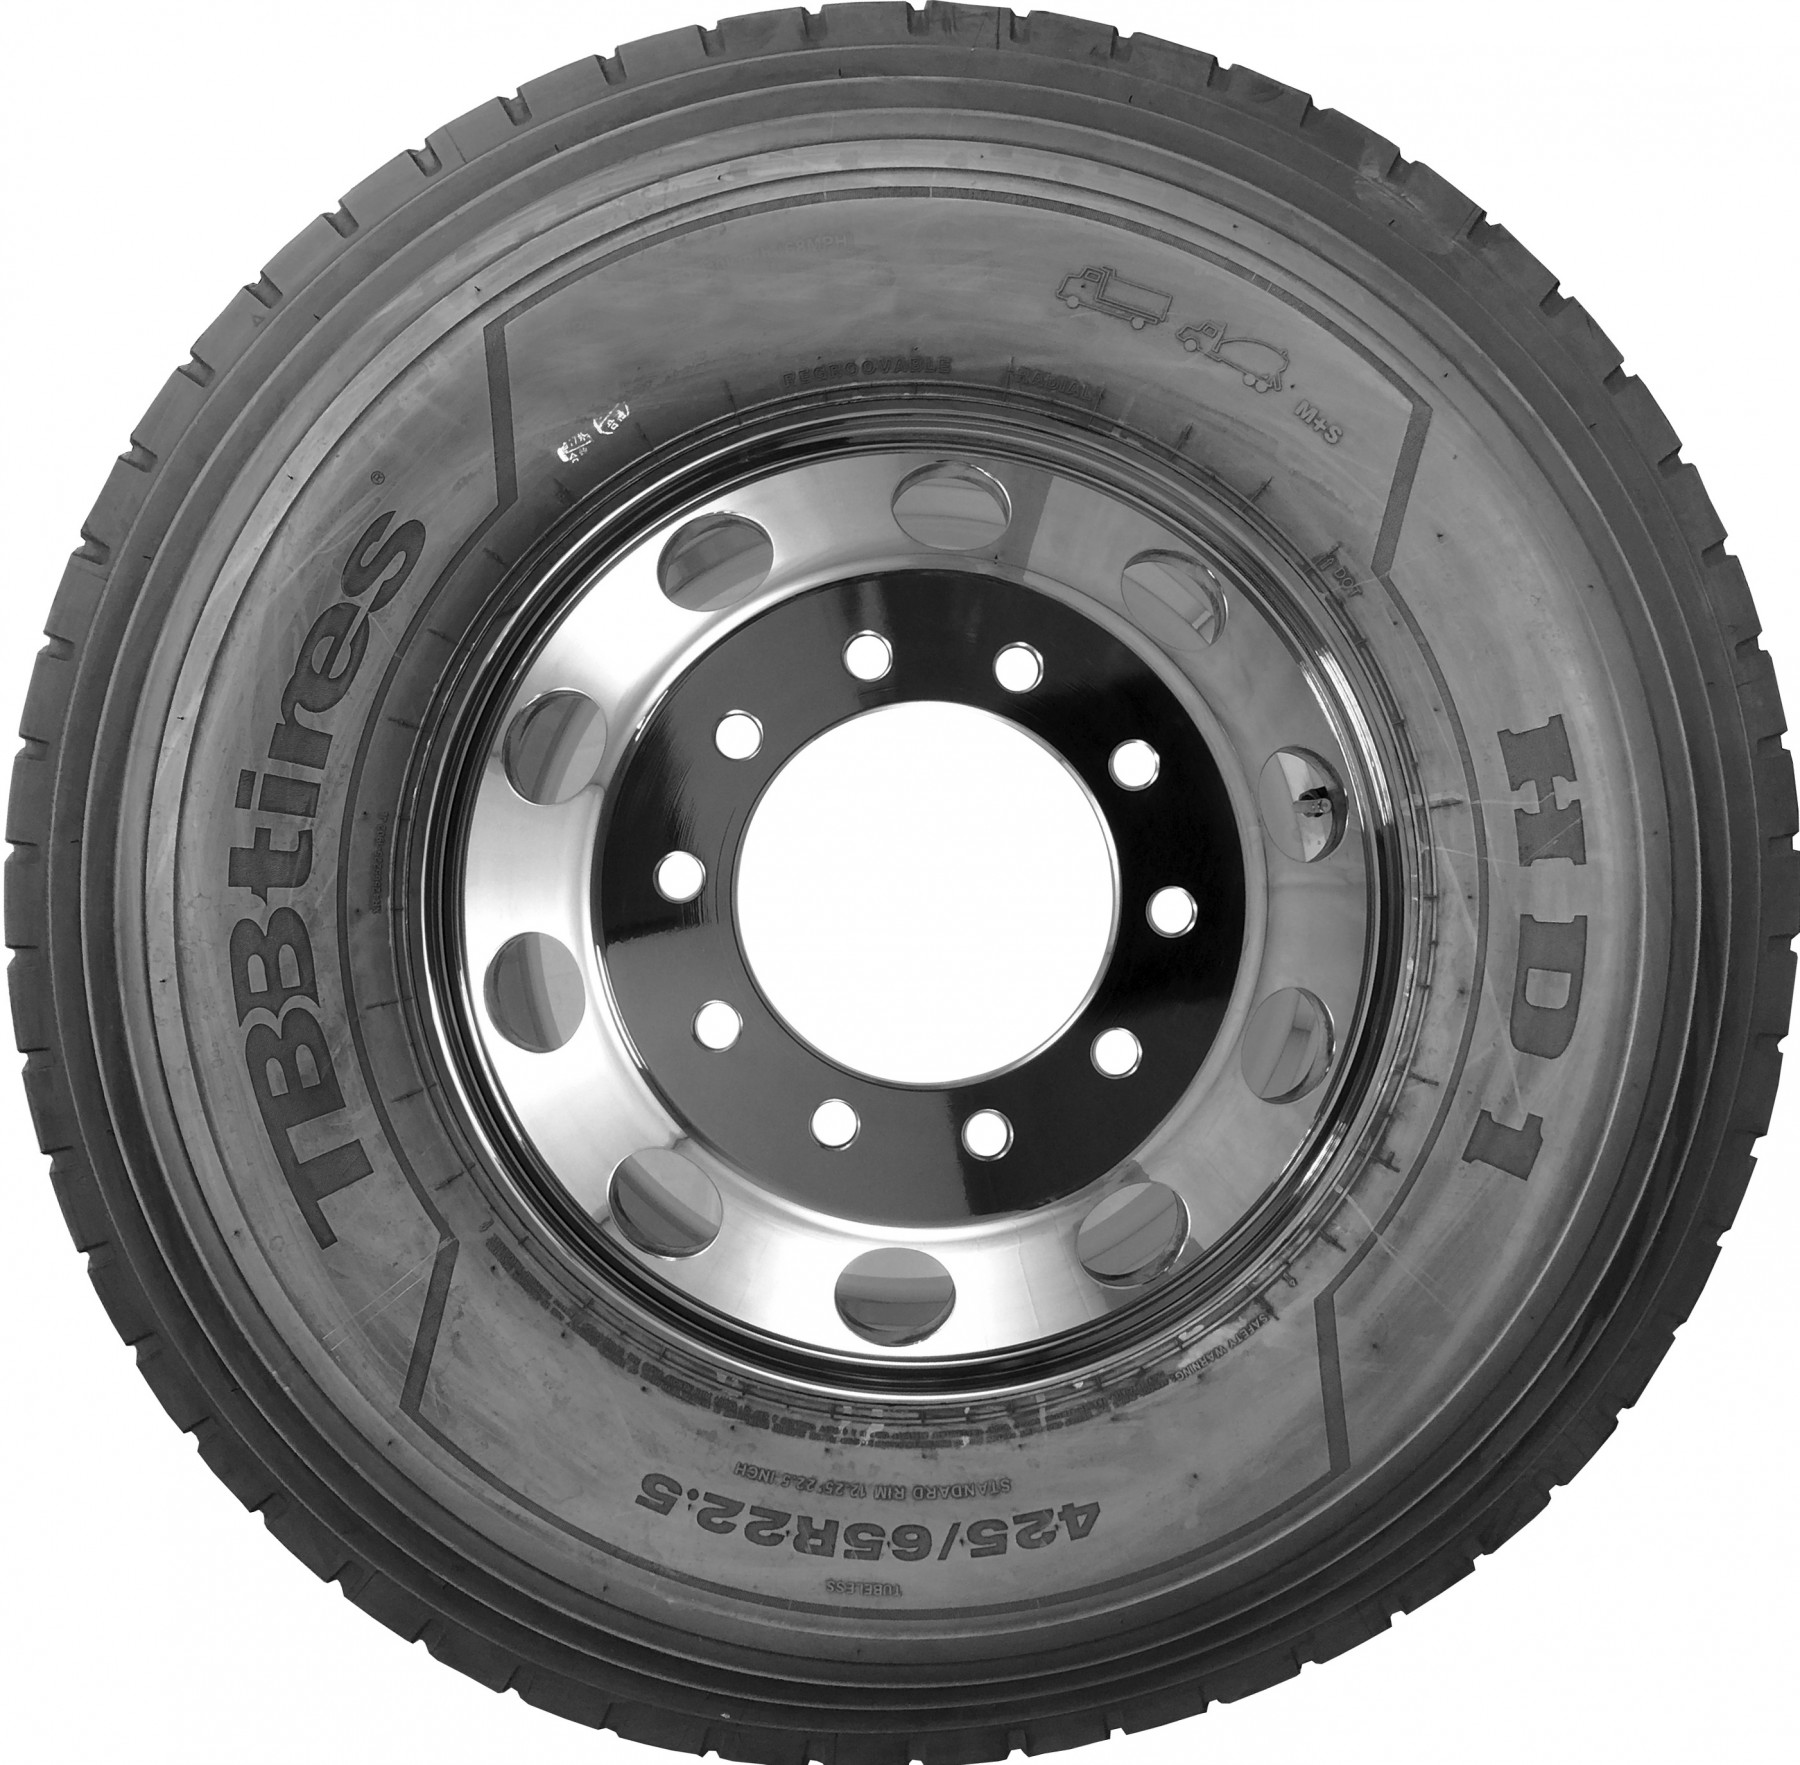 Blemish Truck Tyre B Grade/Defective/Blems /Blemished Tires 295/80r22.5  425/65r22.5 Car Tyre Thailand TBR New Tyre Flaw Tires/Cut Brand TBR R17.5  R19.5 R22.5 - China Blem Truck Tyre, B Grade/Defective/Blems /Blemished  Tires